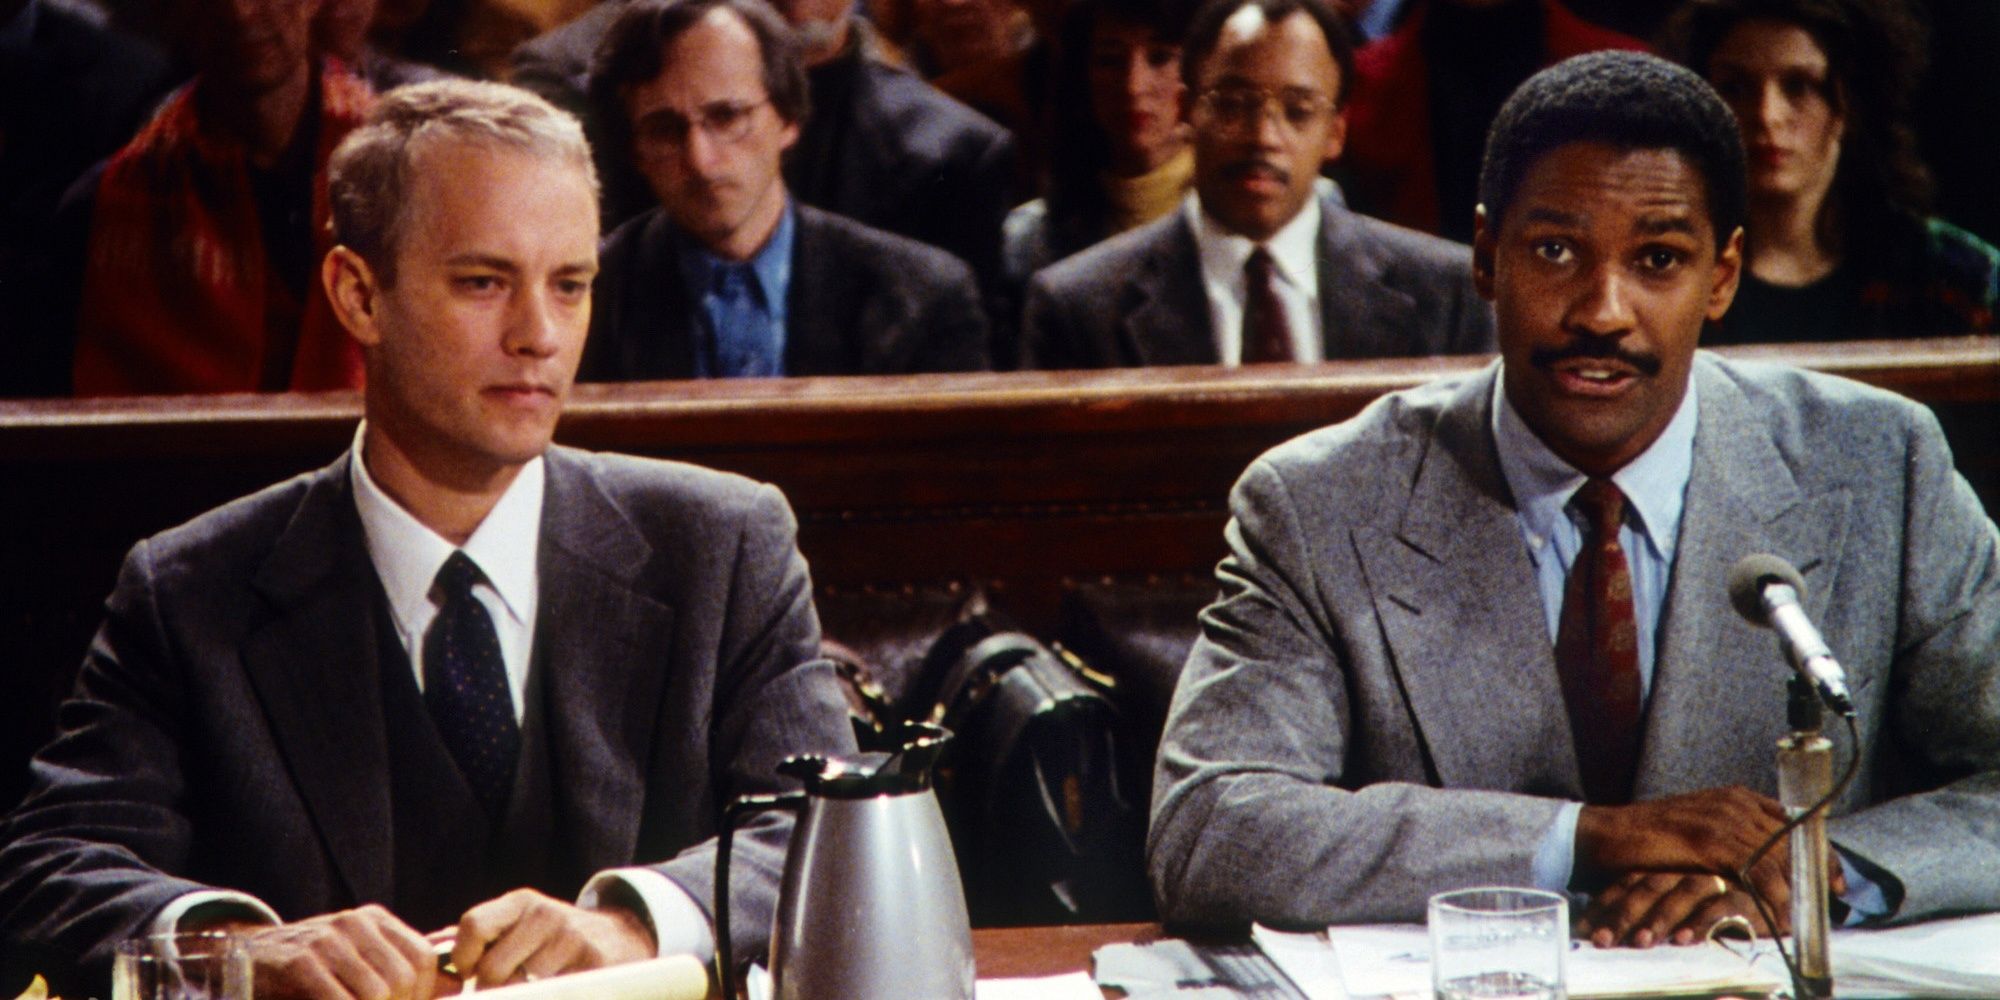 Denzel Washington and Tom Hanks in court in Philadelphia 